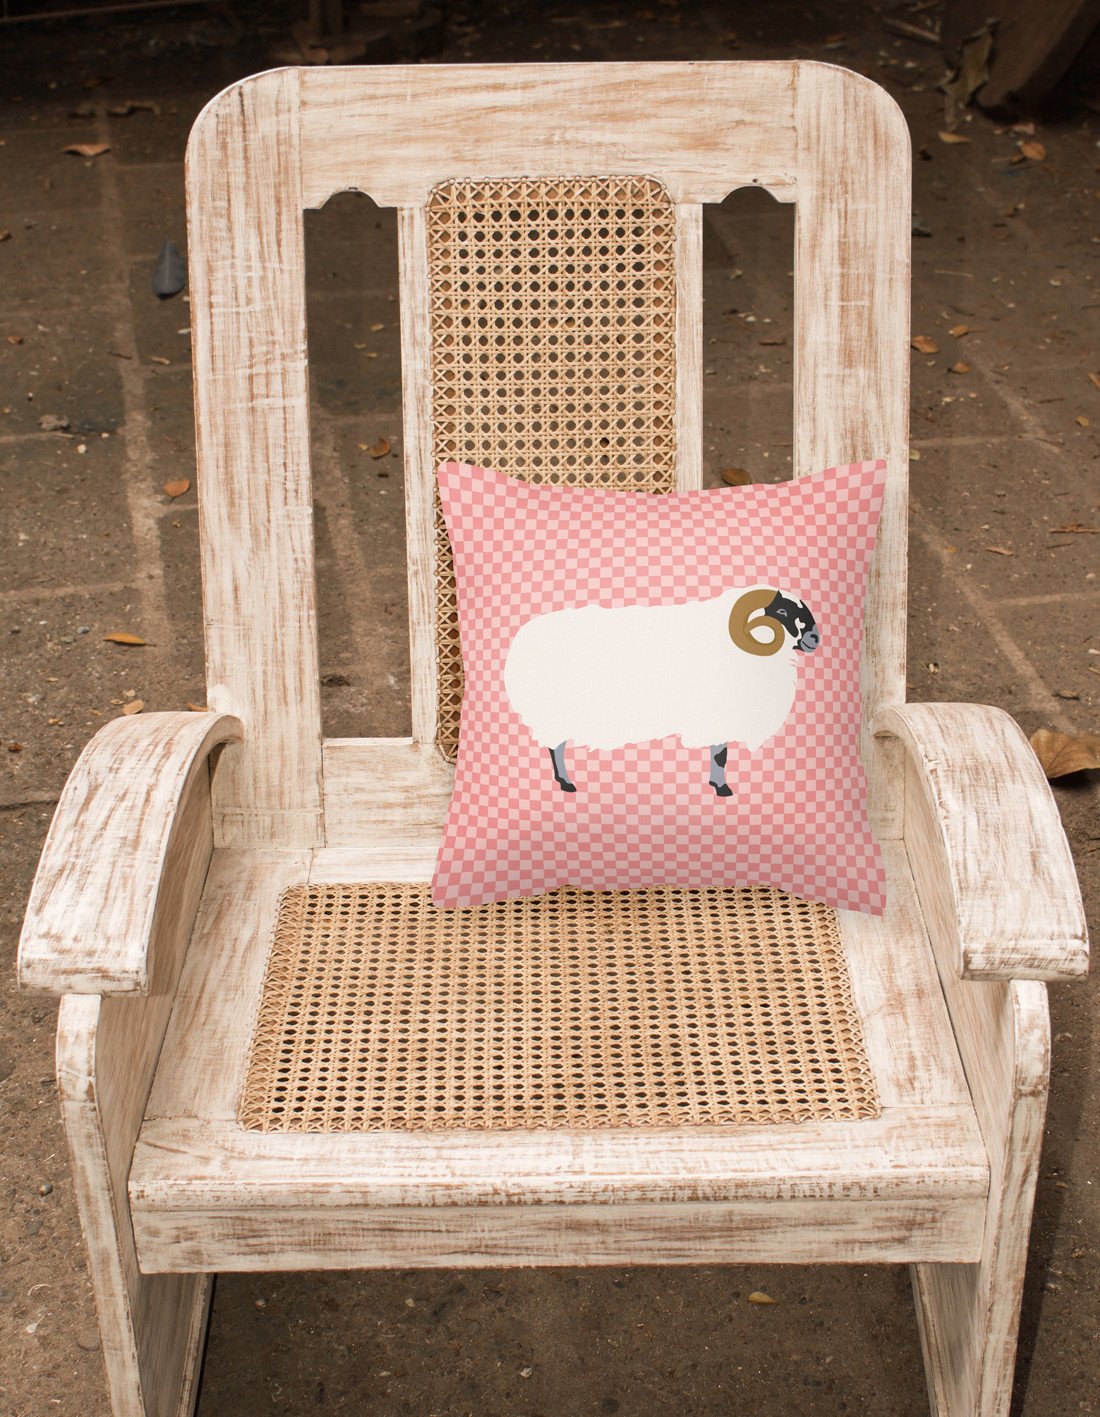 Scottish Blackface Sheep Pink Check Fabric Decorative Pillow BB7973PW1818 by Caroline's Treasures